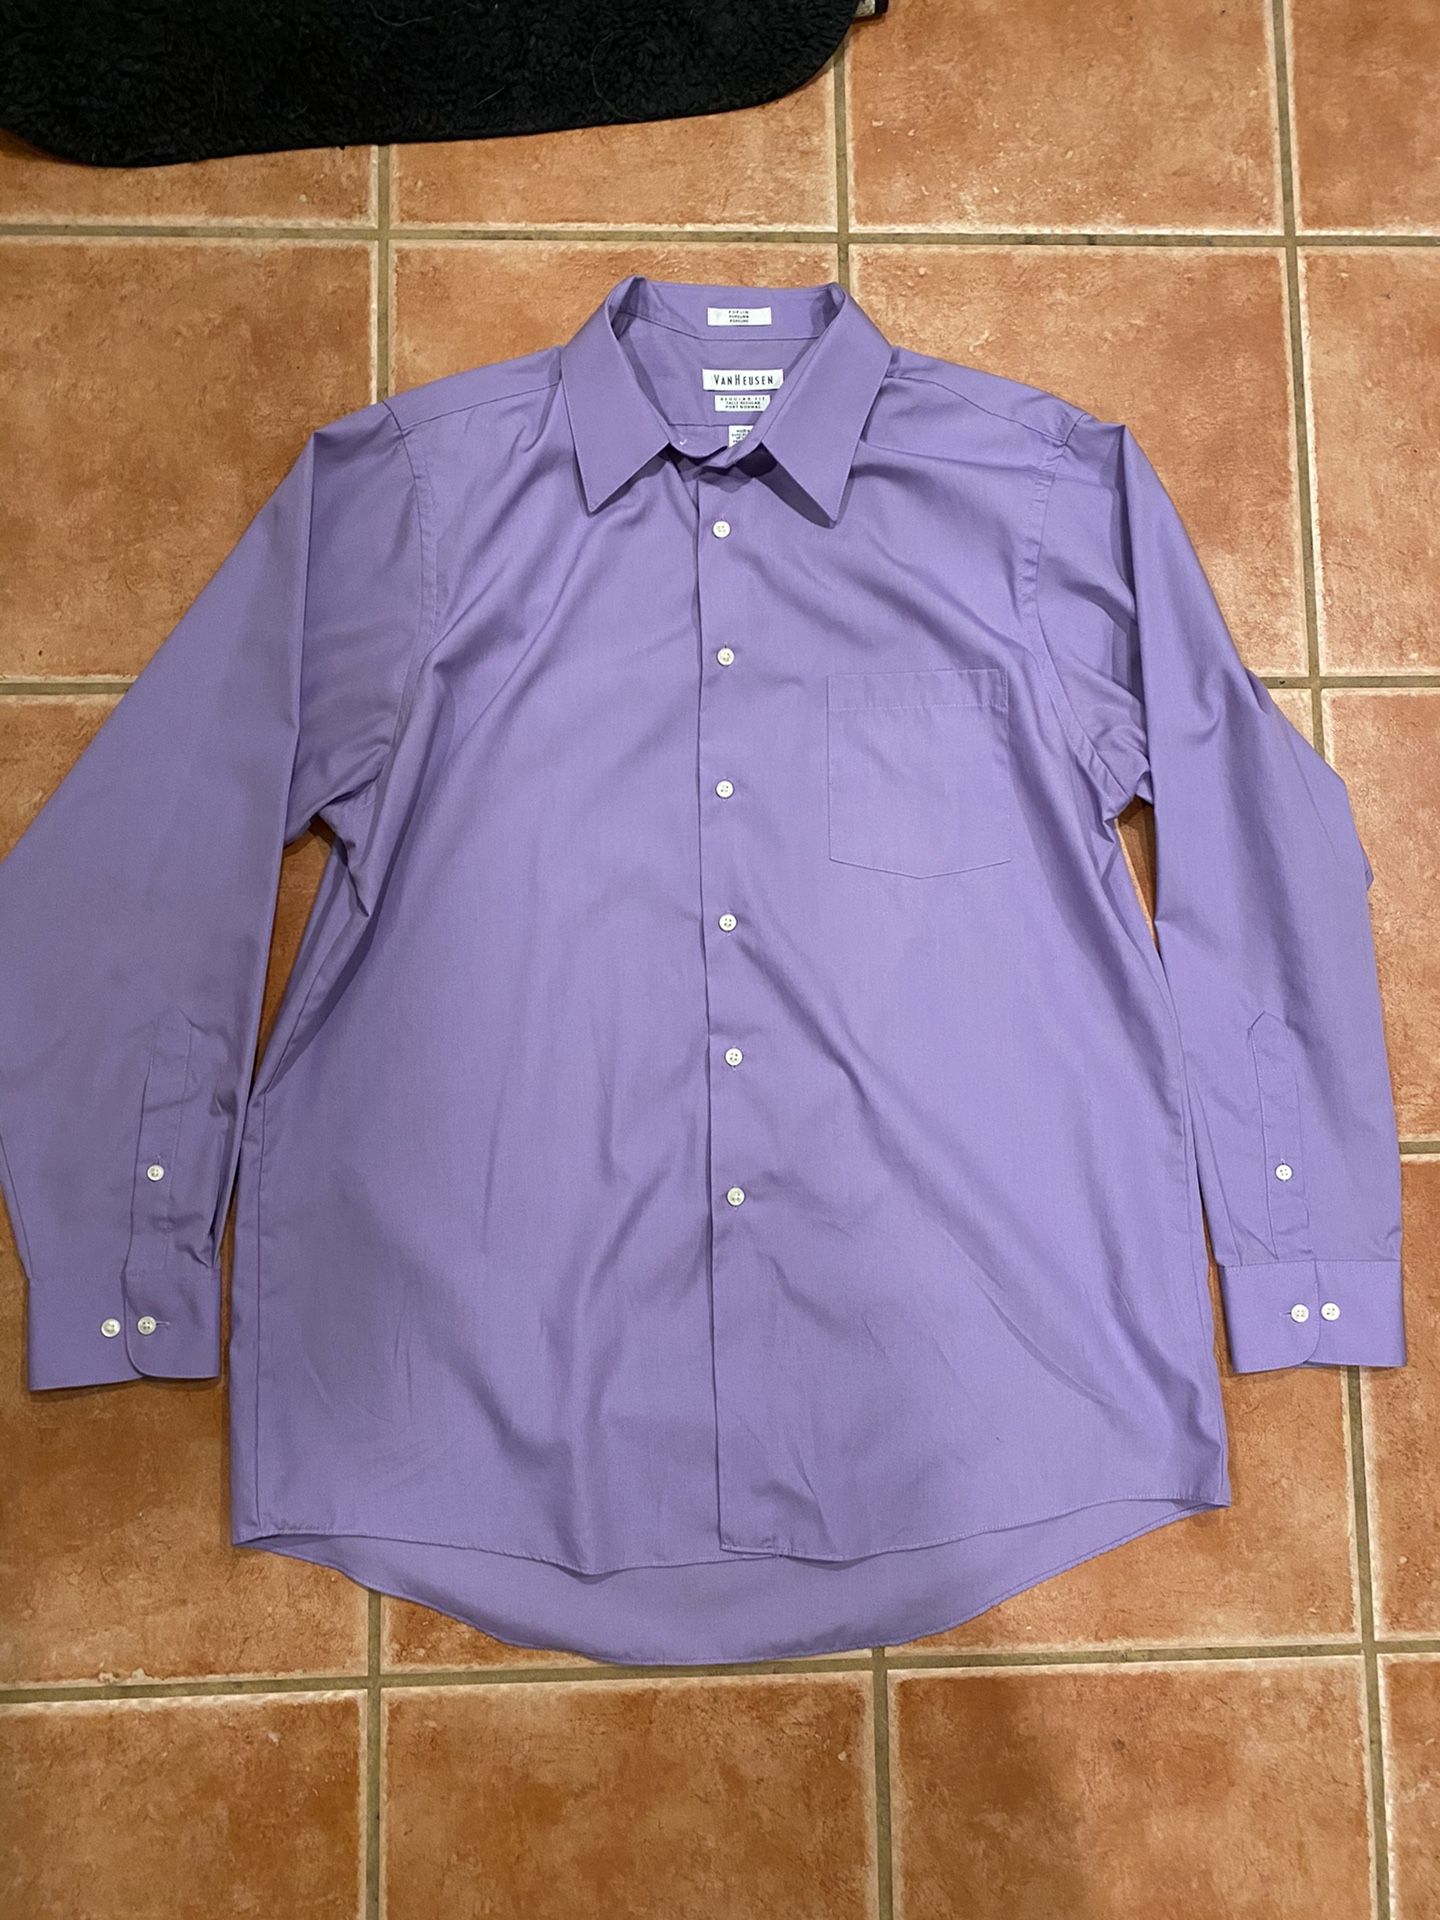 Van Heusen purple dress shirt 34/35 16 1/2